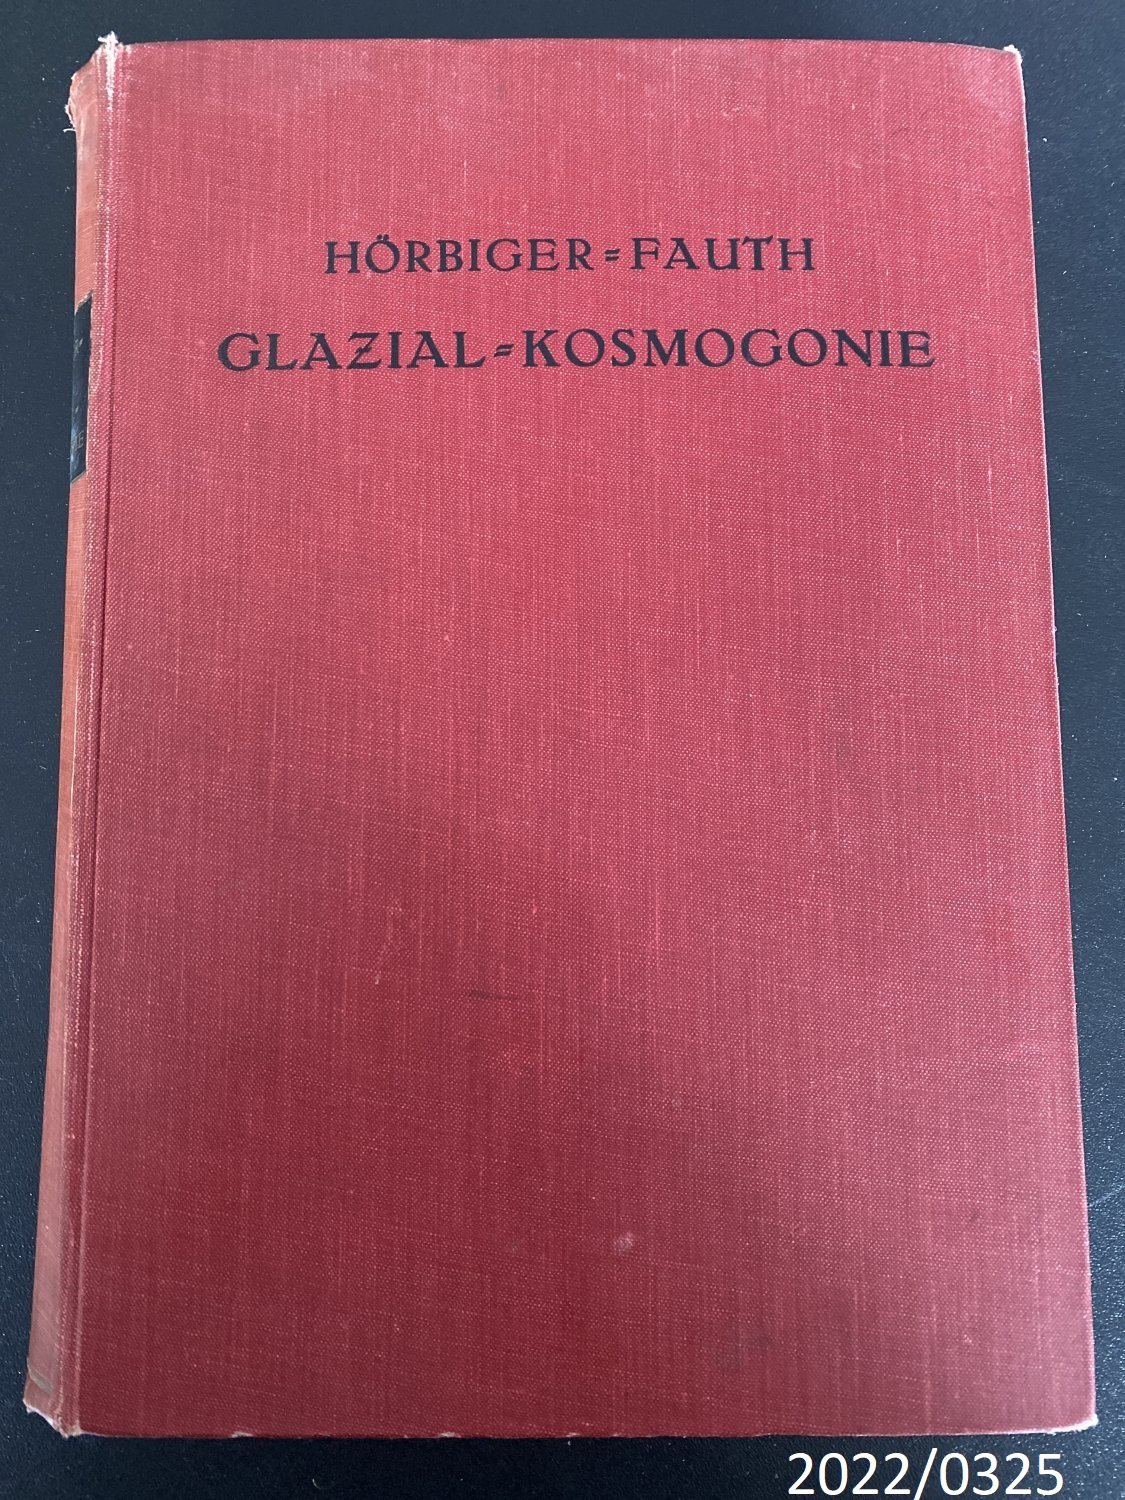 Buch Hörbiger Fauth "Glazial-Kosmogonie" (Stadtmuseum Bad Dürkheim im Kulturzentrum Haus Catoir CC BY-NC-SA)